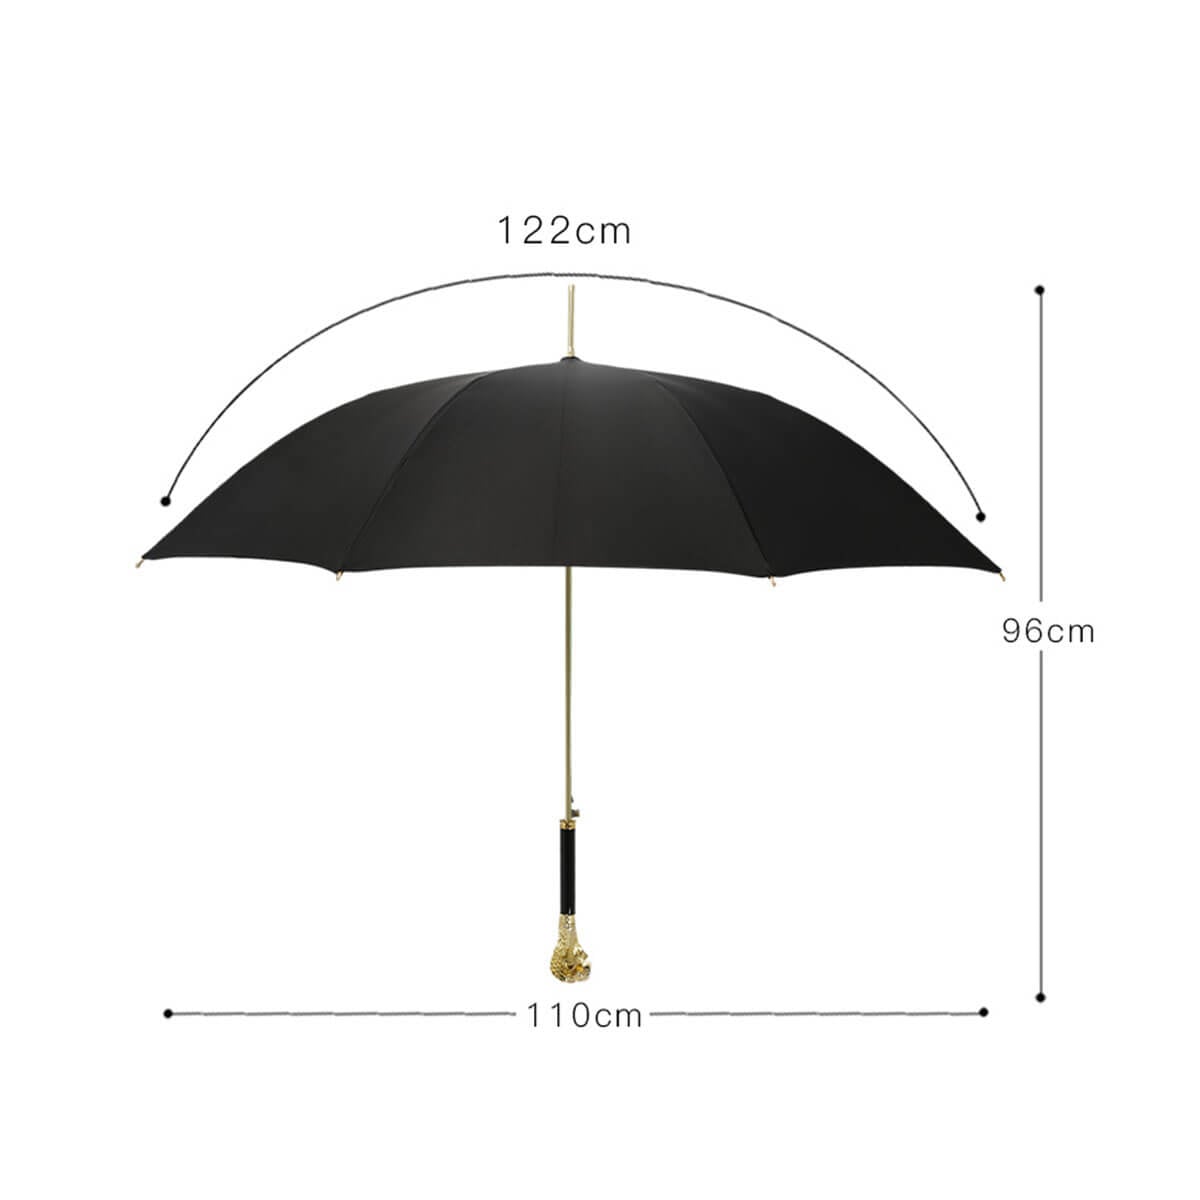 Gold Snake Luxury Business Long Handle Umbrella